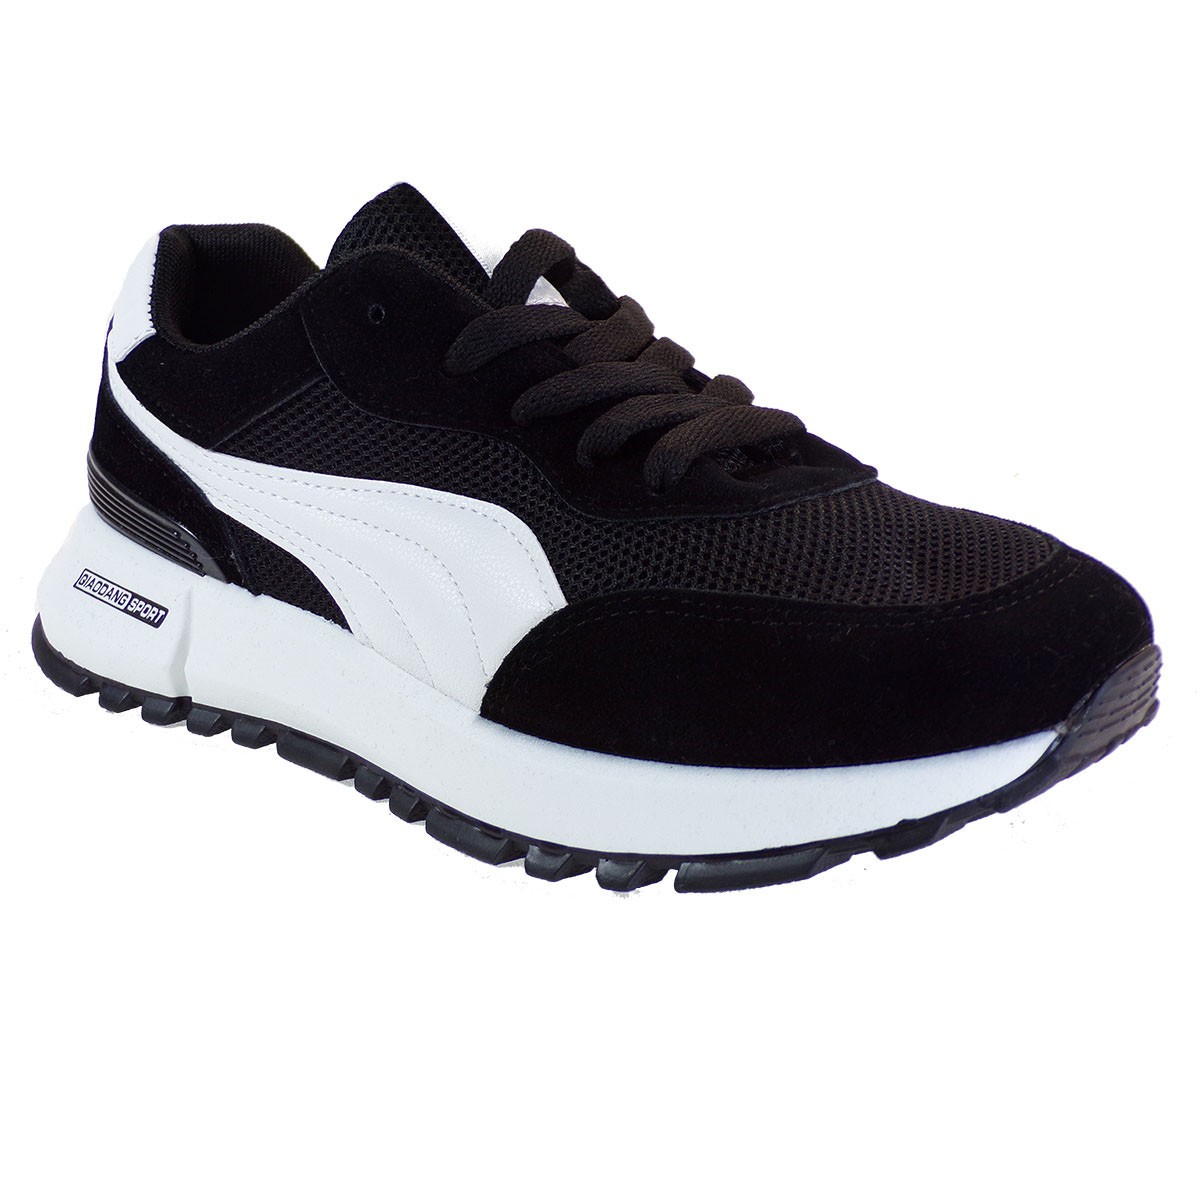 Bagiota Shoes Γυναικεία Παπούτσια Αθλητικά C8907 Μαύρο